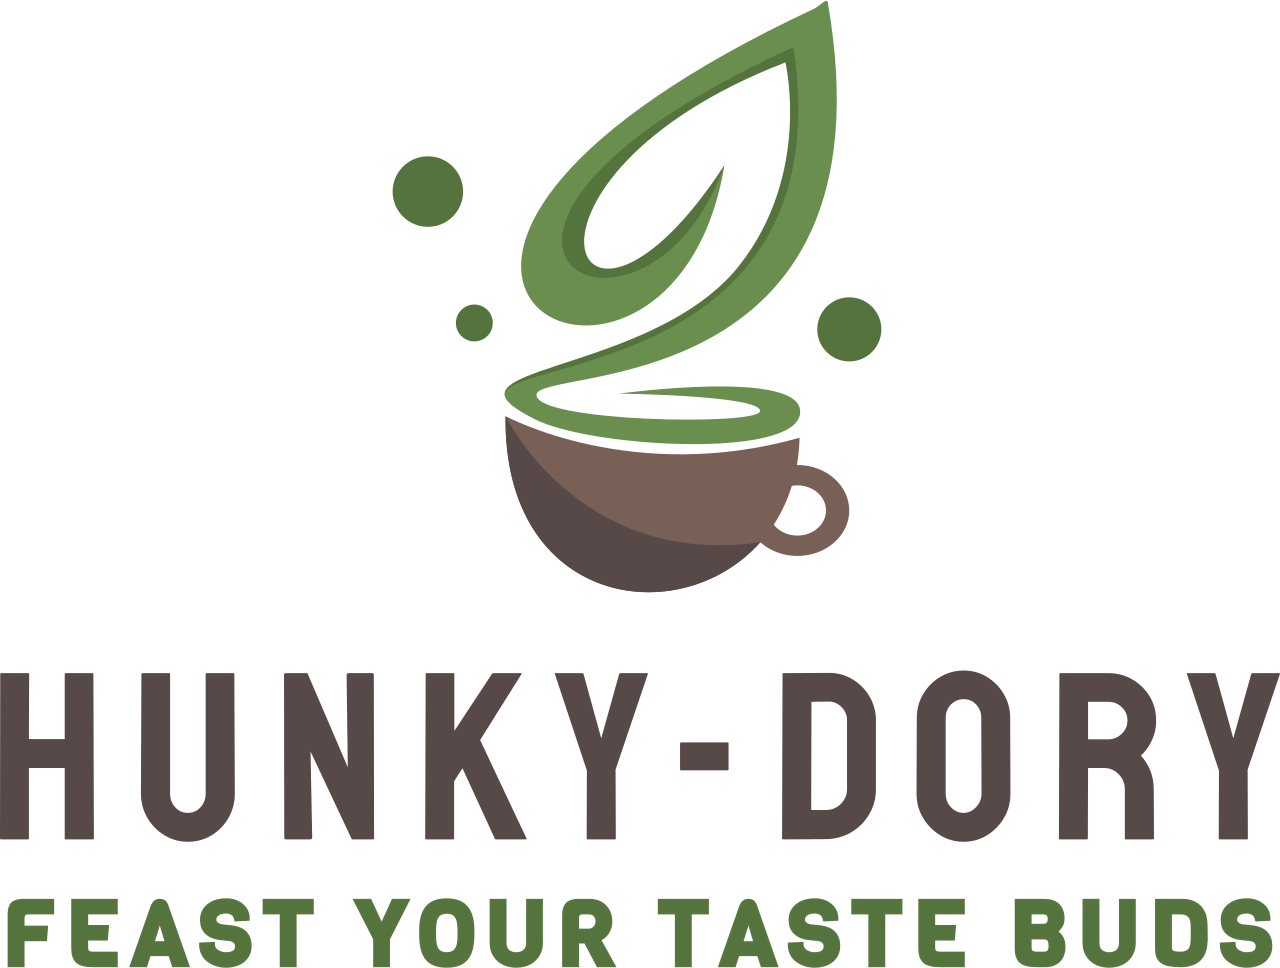 HUNKY-DORY's web page